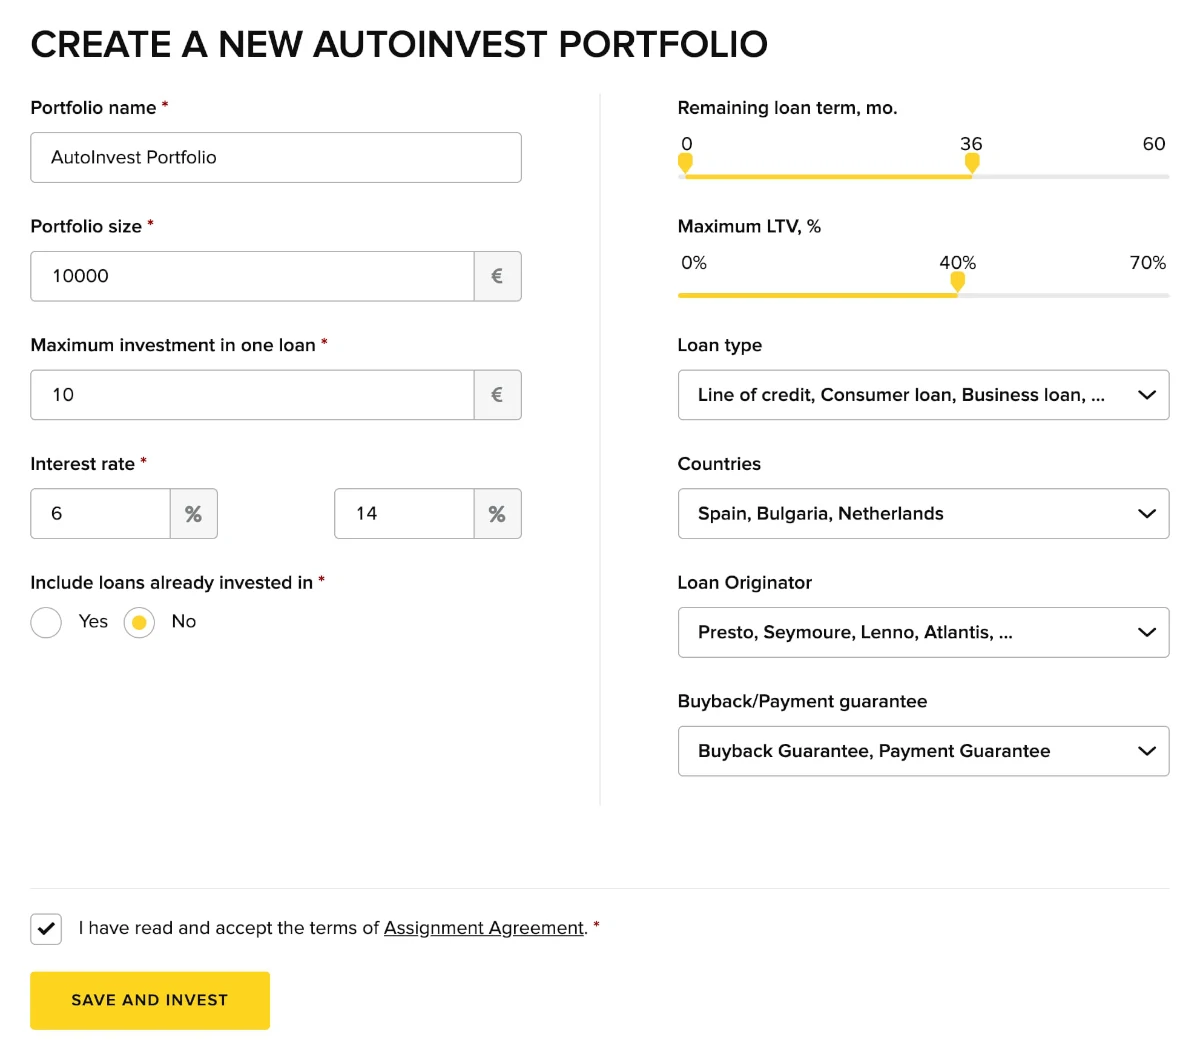 Create a new autoinvest portfolio on Viventor